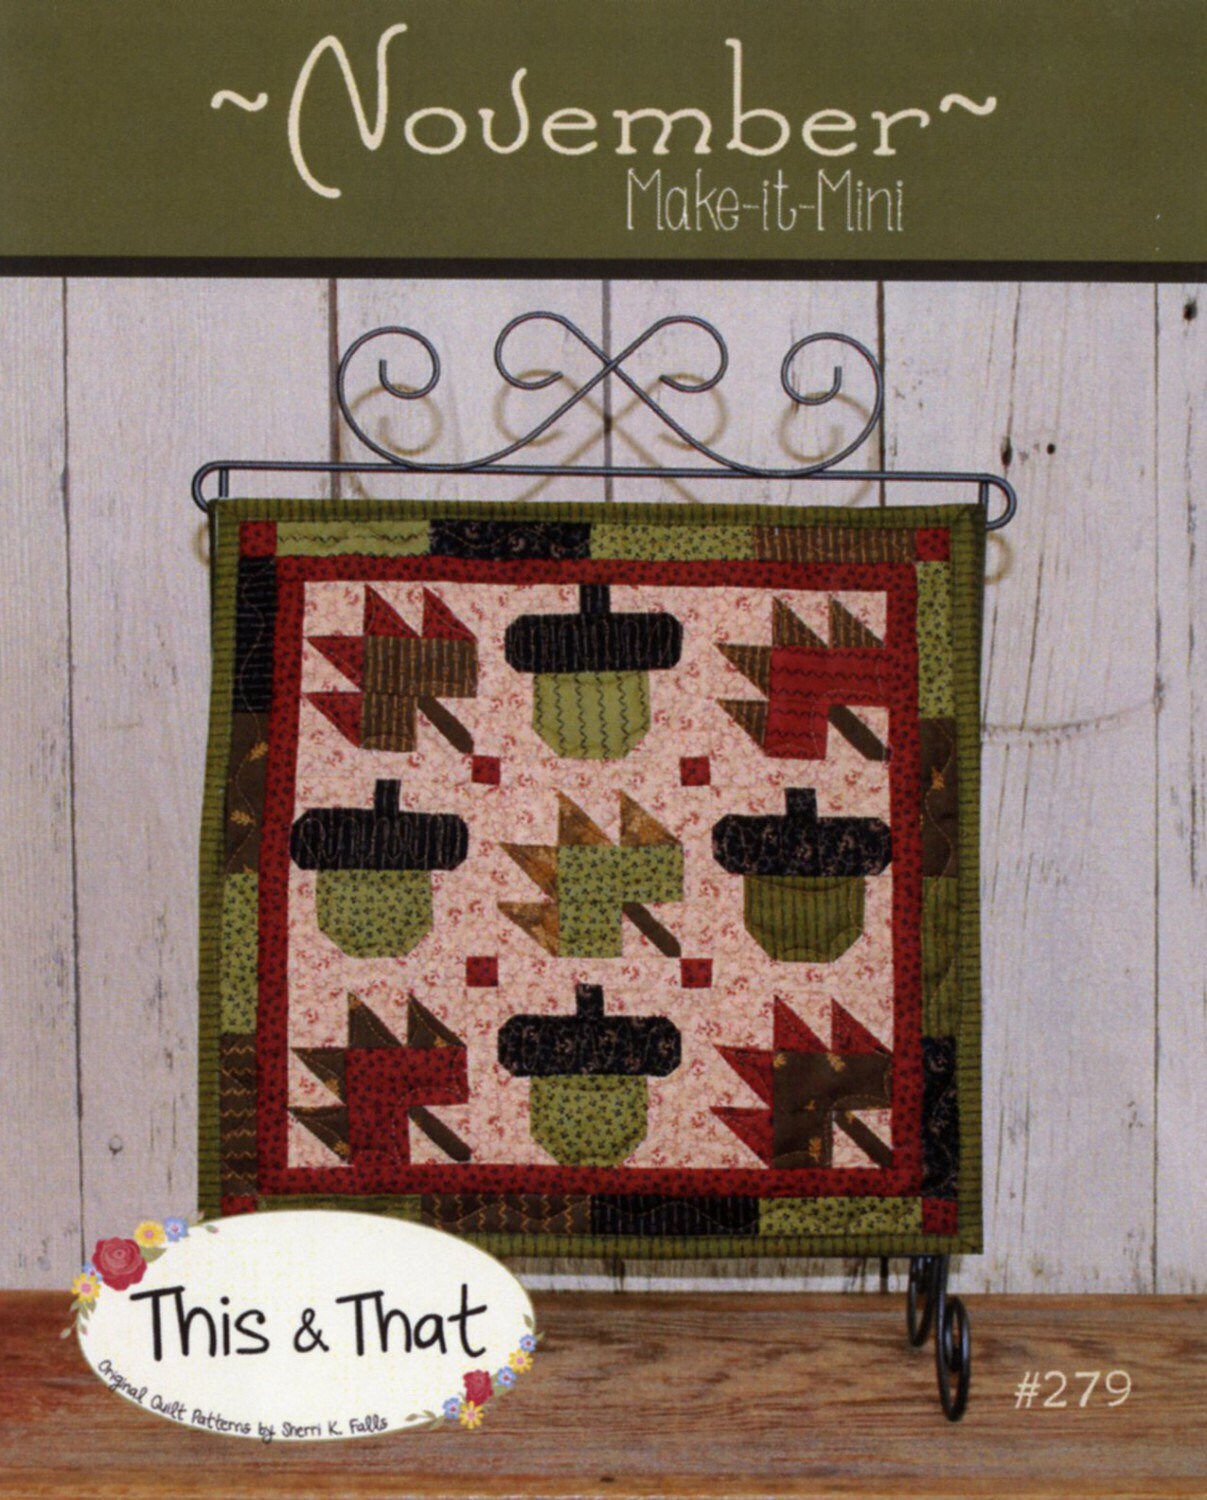 Make It Mini November Quilt Pattern - This & That - Sherri Falls